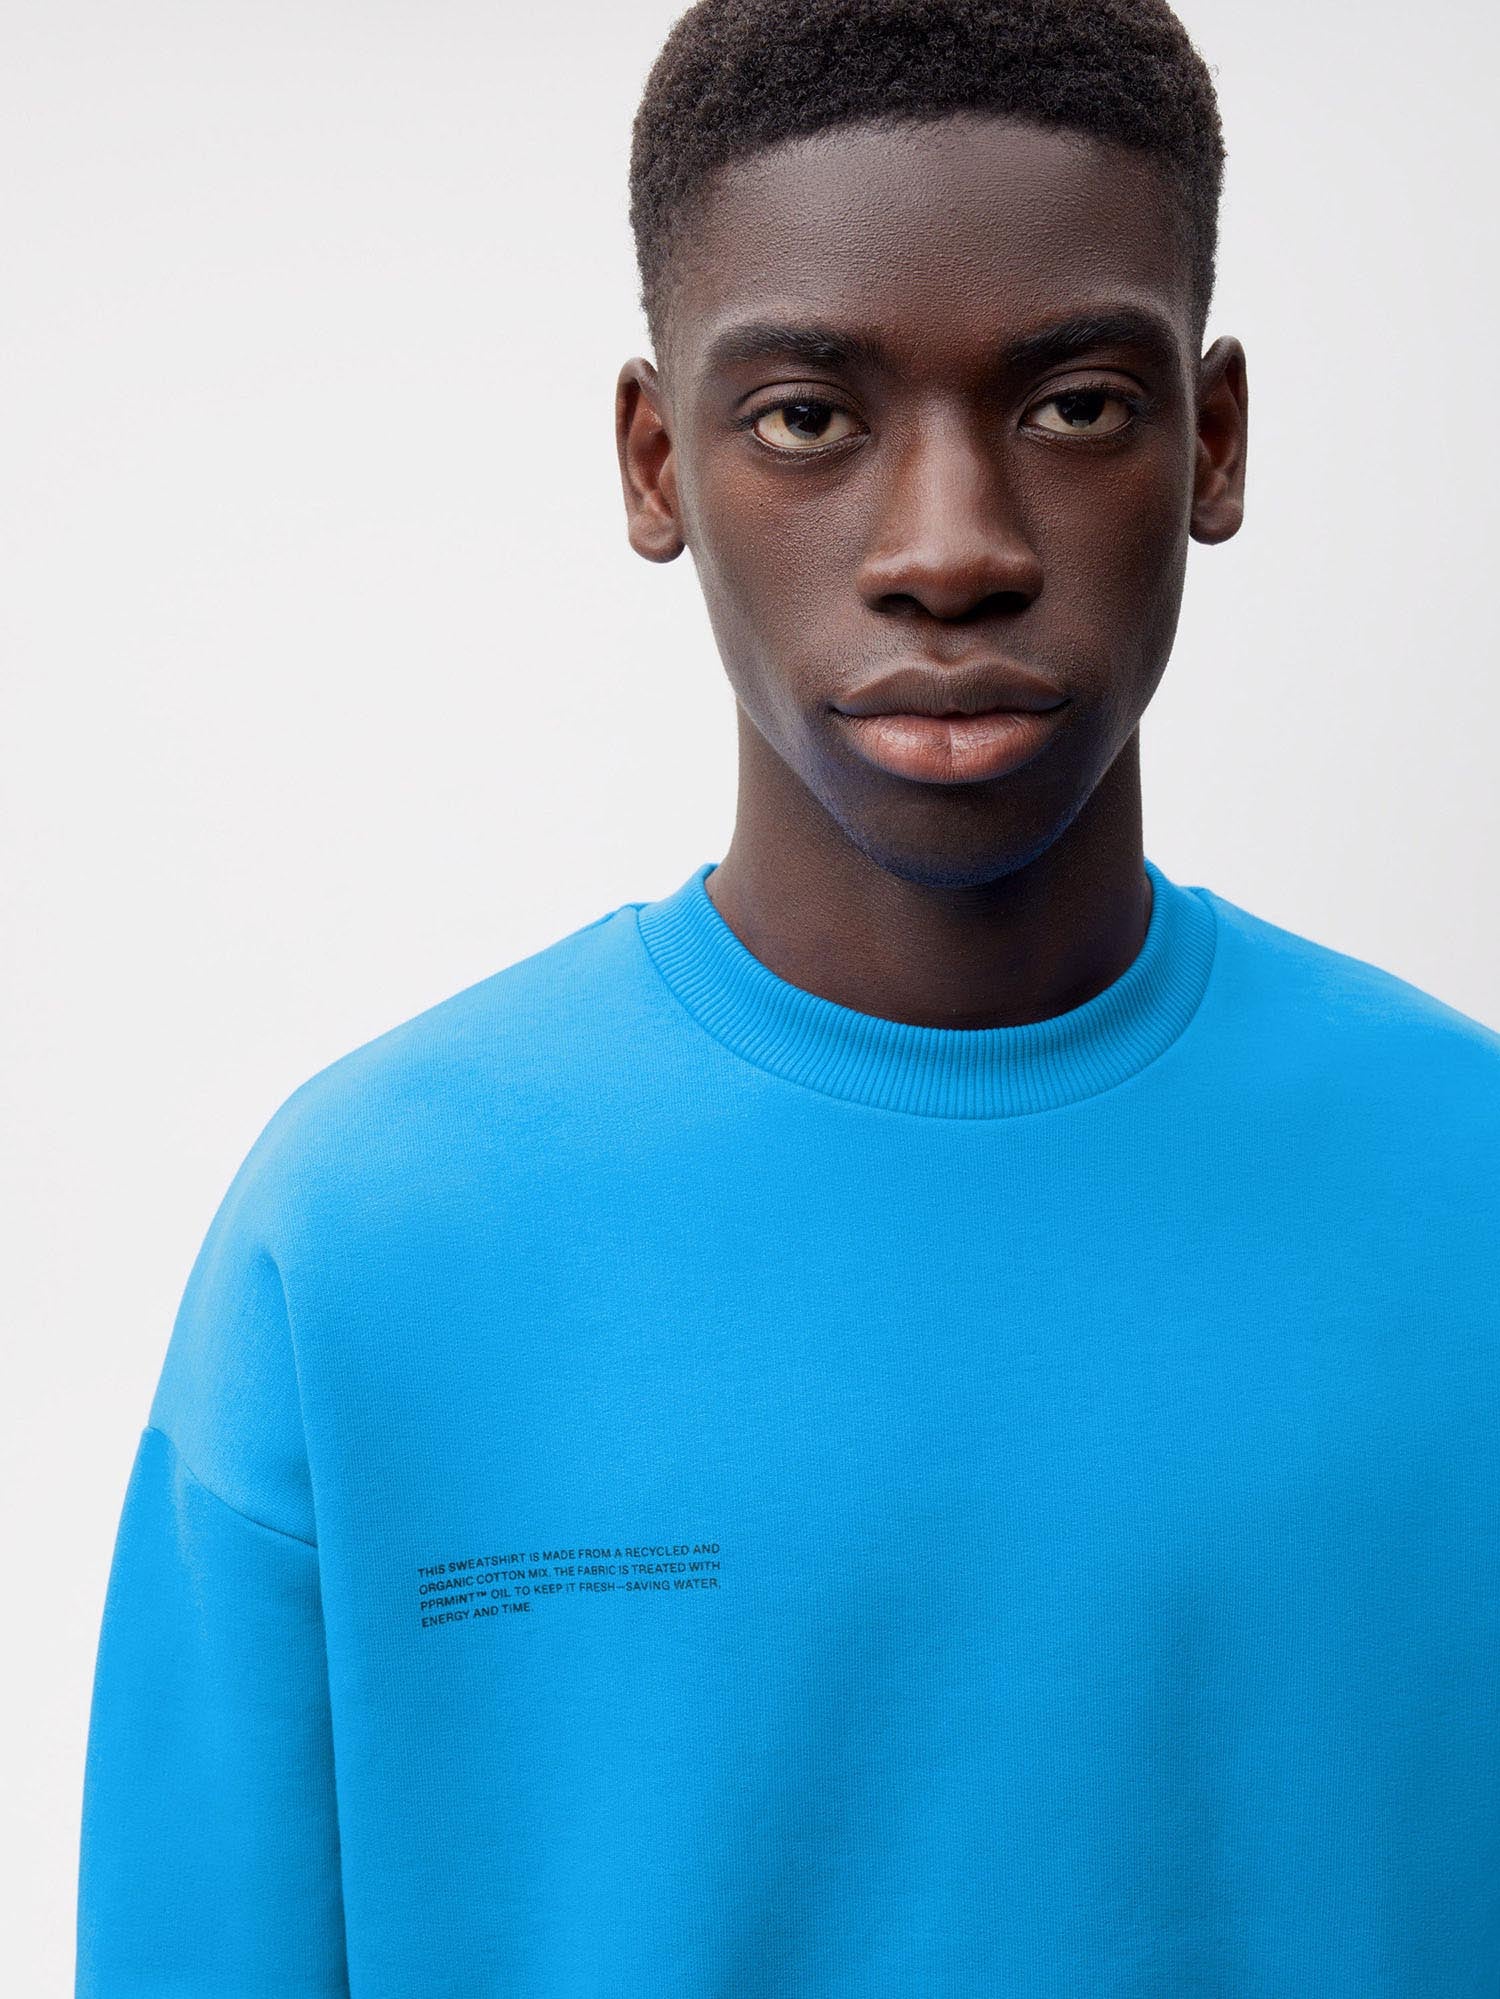 Signature Sweatshirt—cerulean blue male